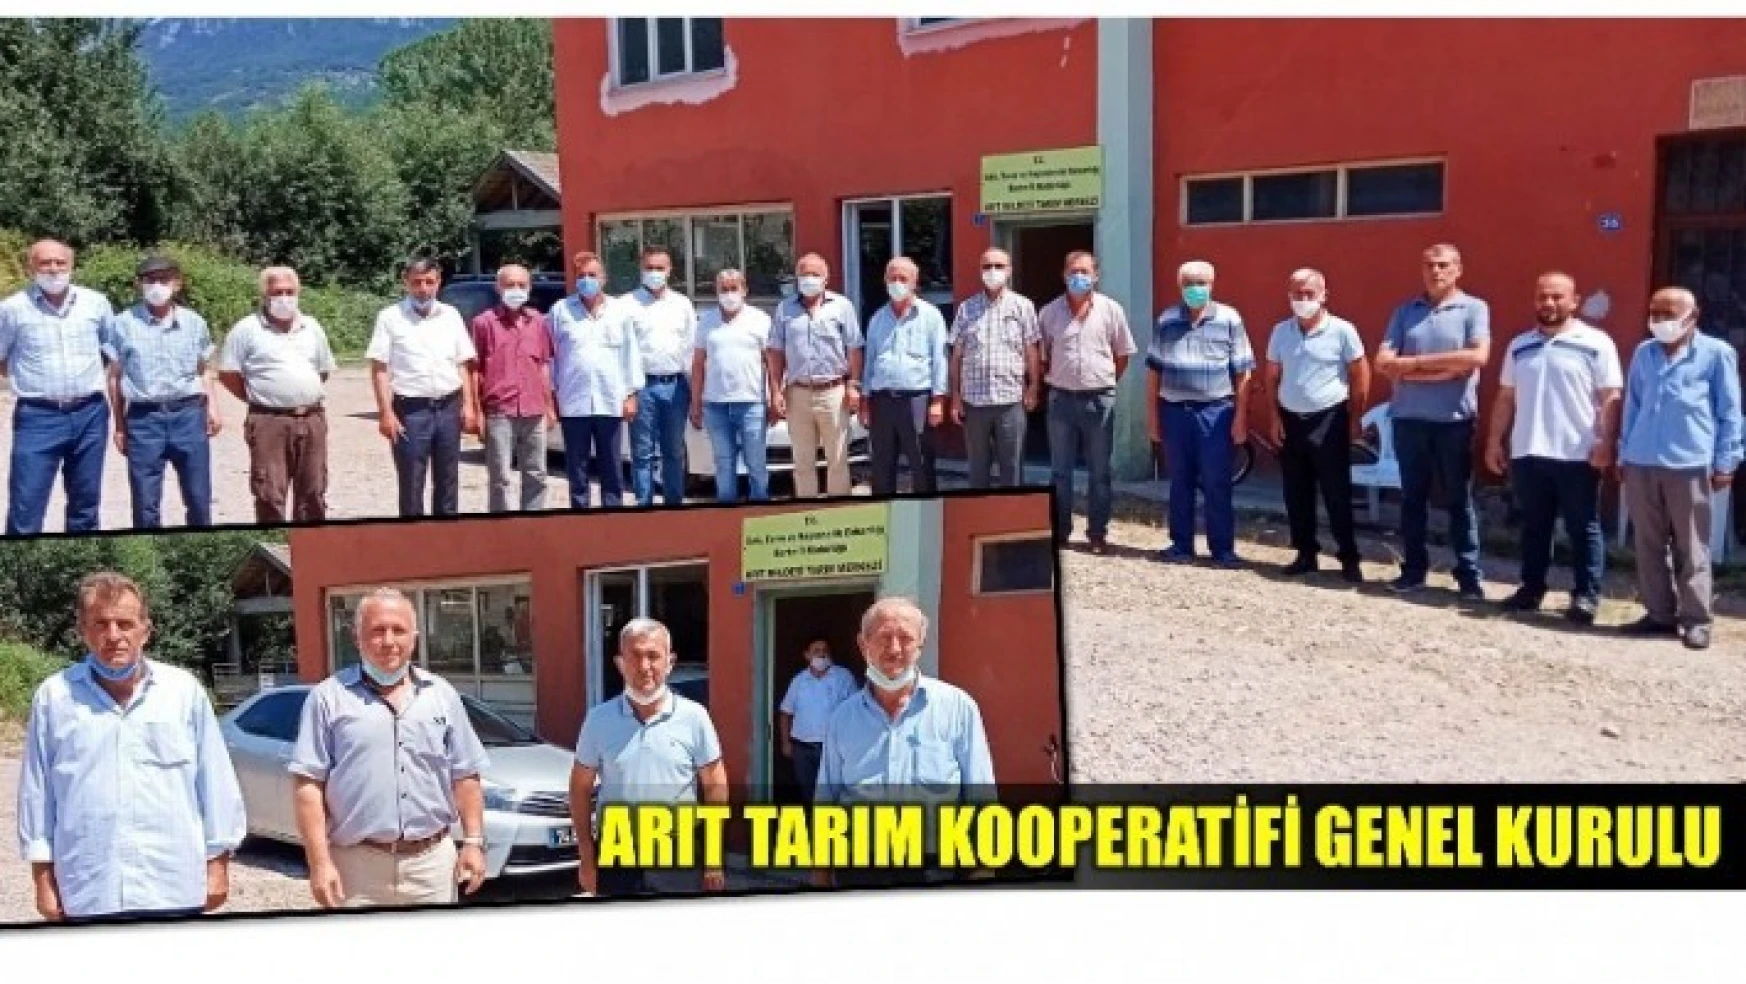 ARIT TARIM KOOPERATİFİ GENEL KURULU